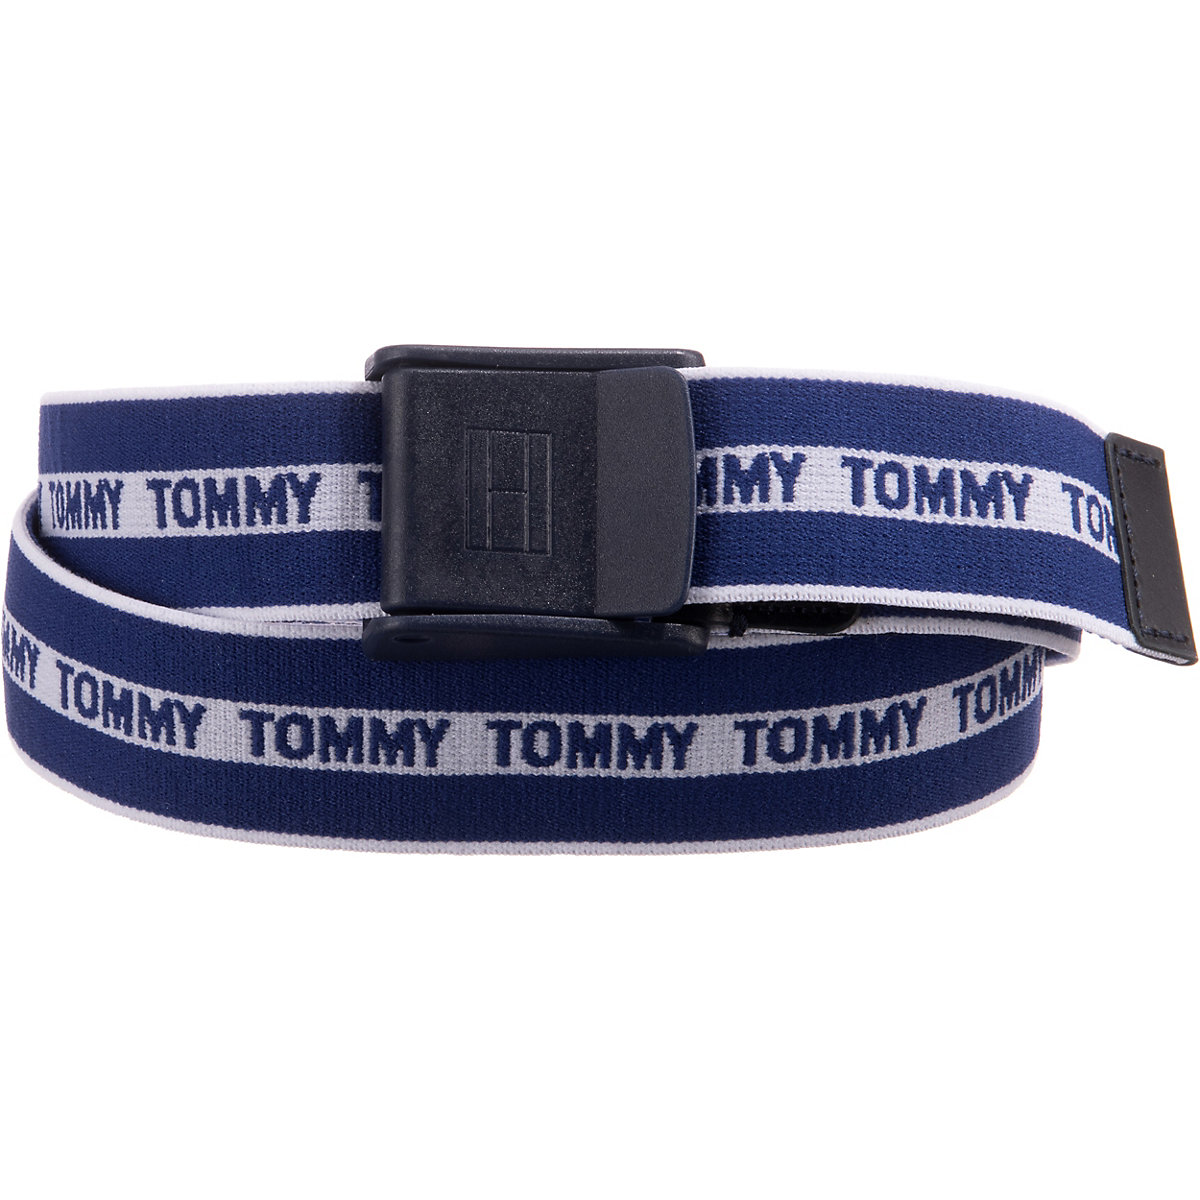 TOMMY HILFIGER Kinder Gürtel (recycelt) blau